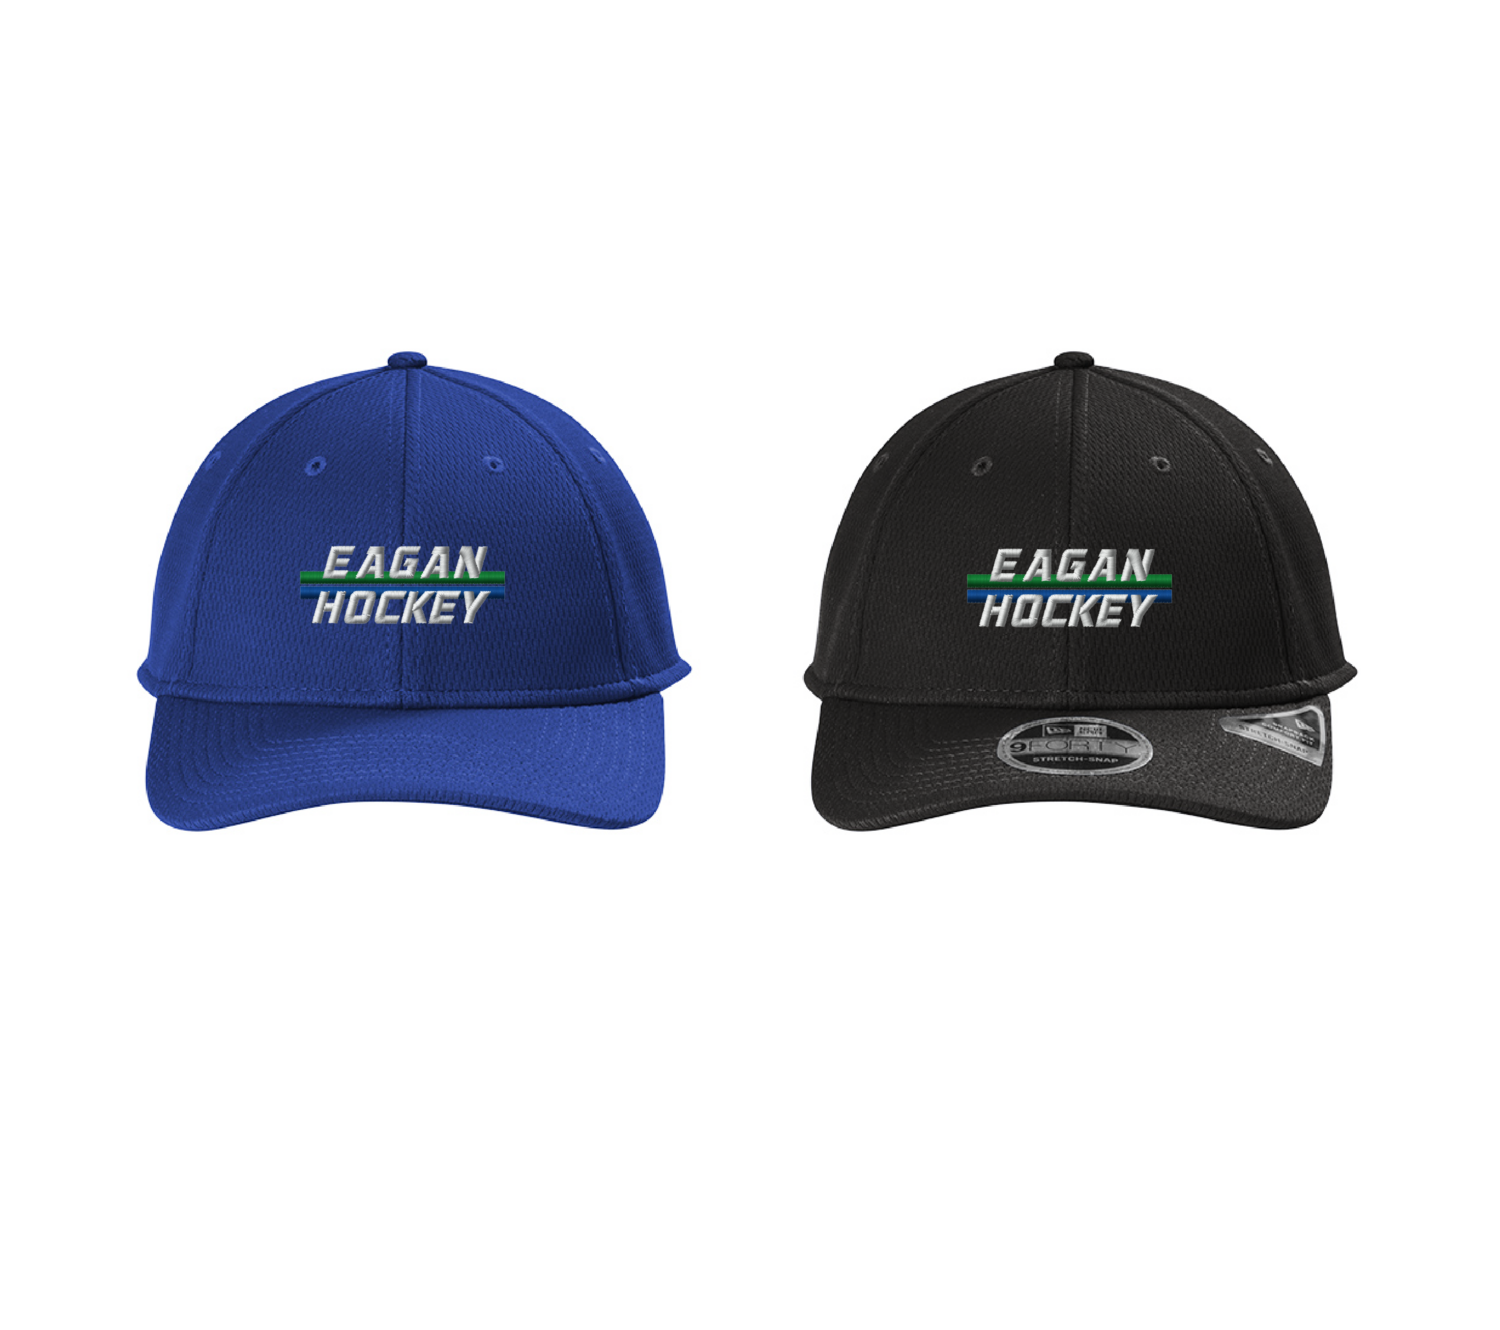 Eagan Hockey New Era Performance Dash Adjustable Cap